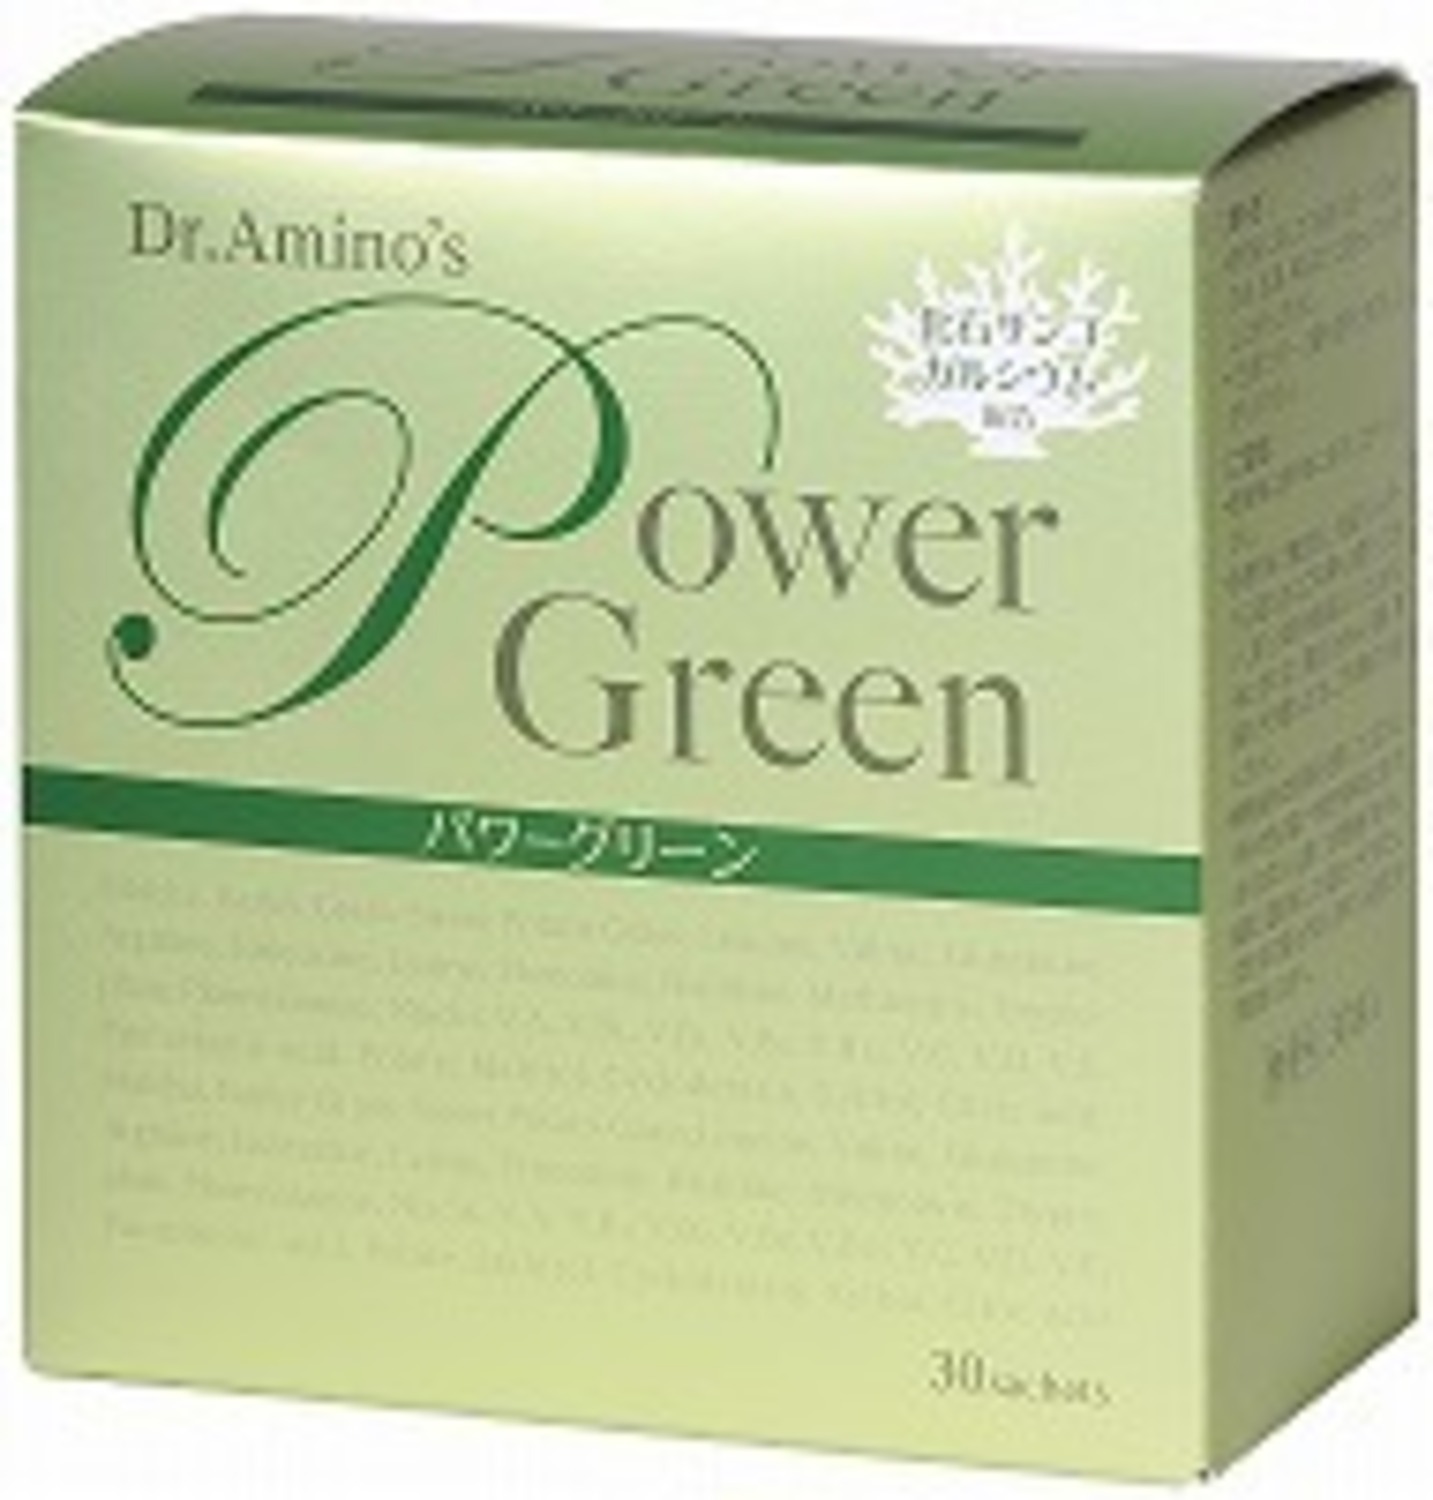 Power Green 1箱30日分30袋入